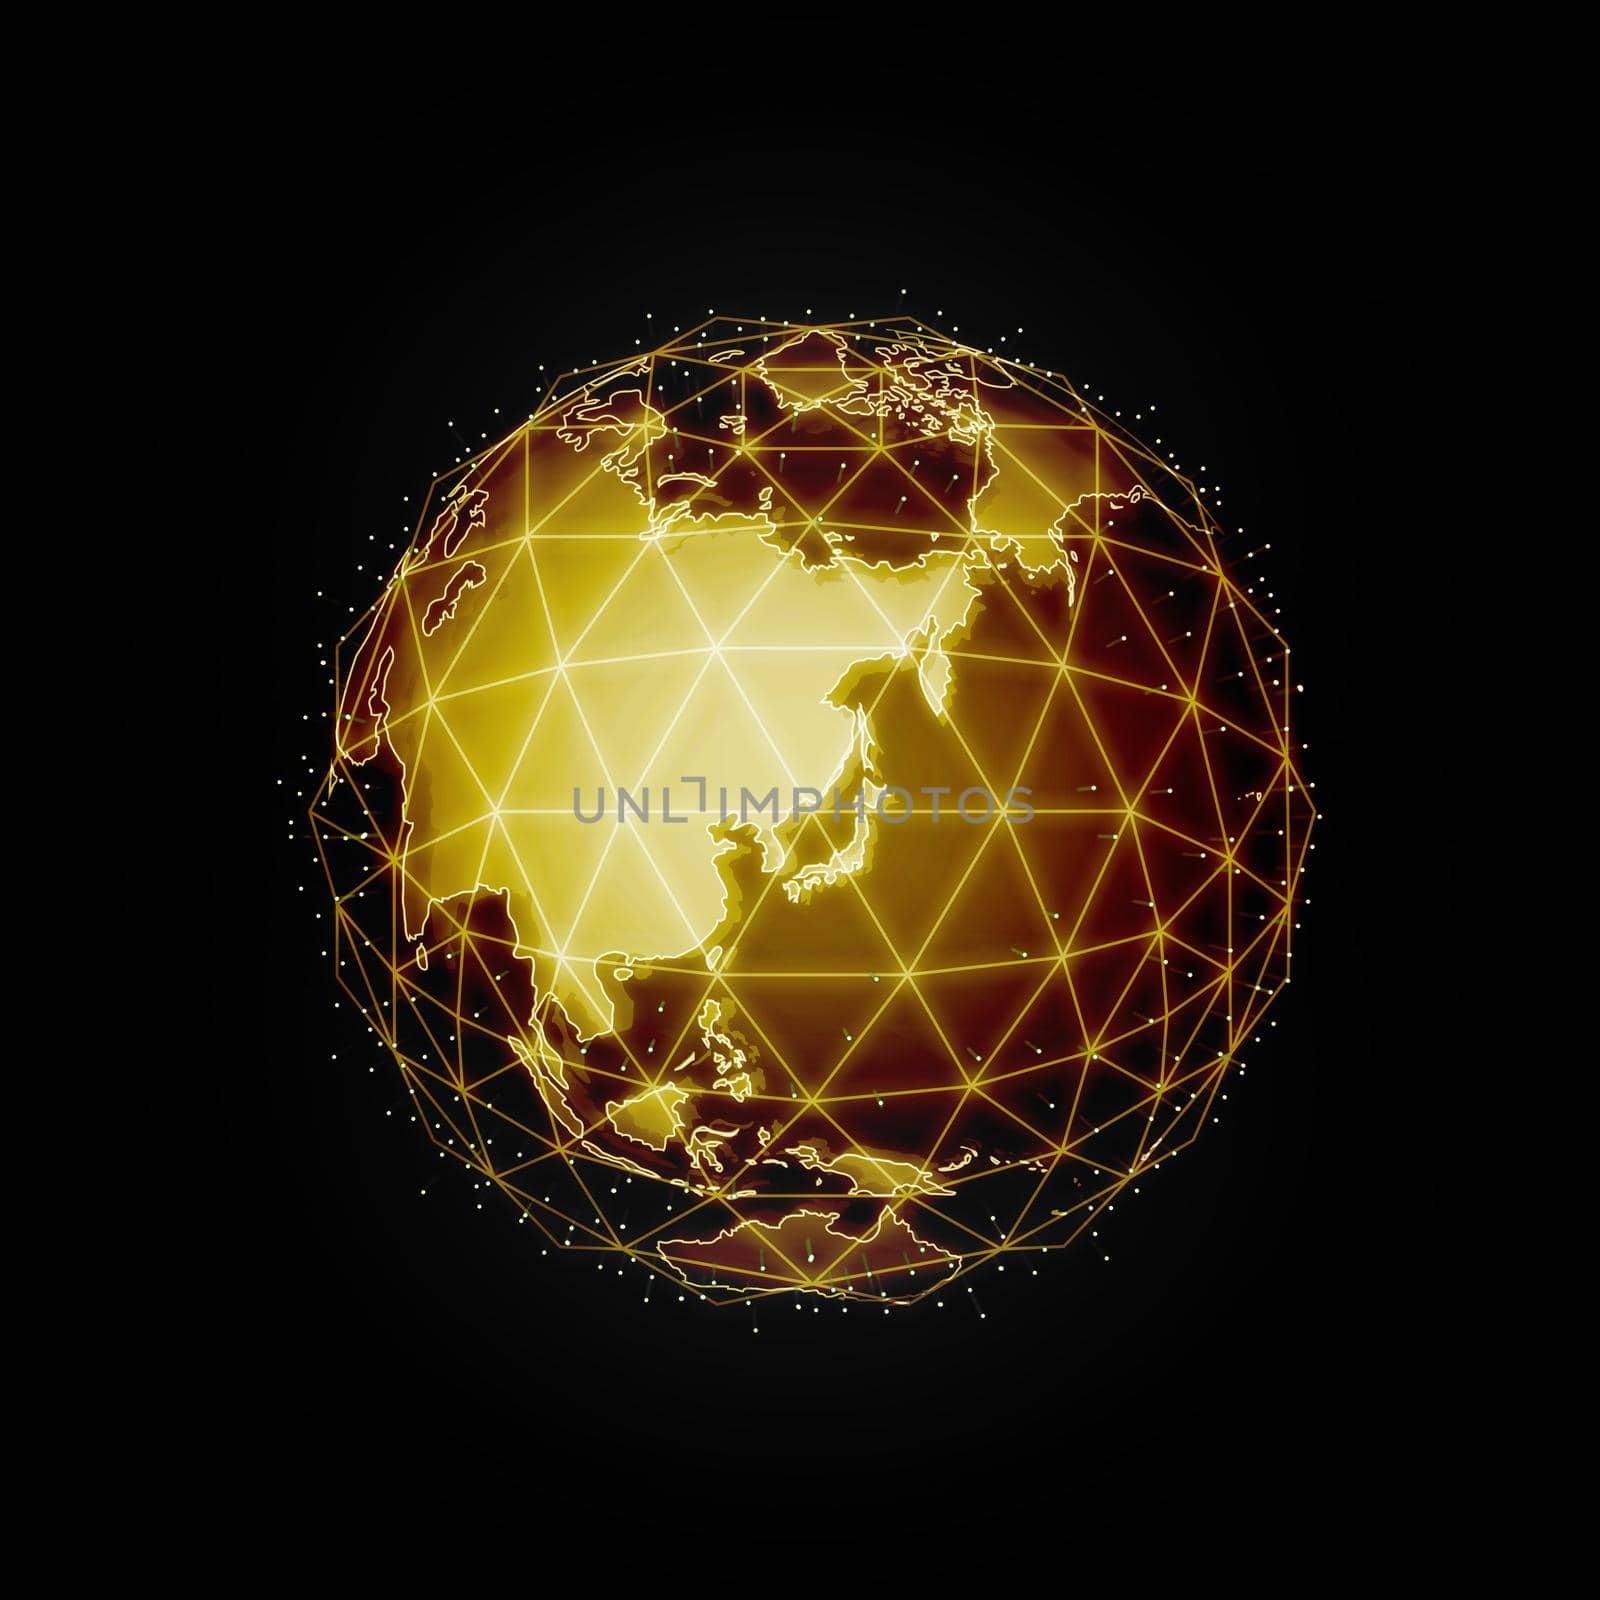 Digital earth illustration ( global network, technology motif ) by barks